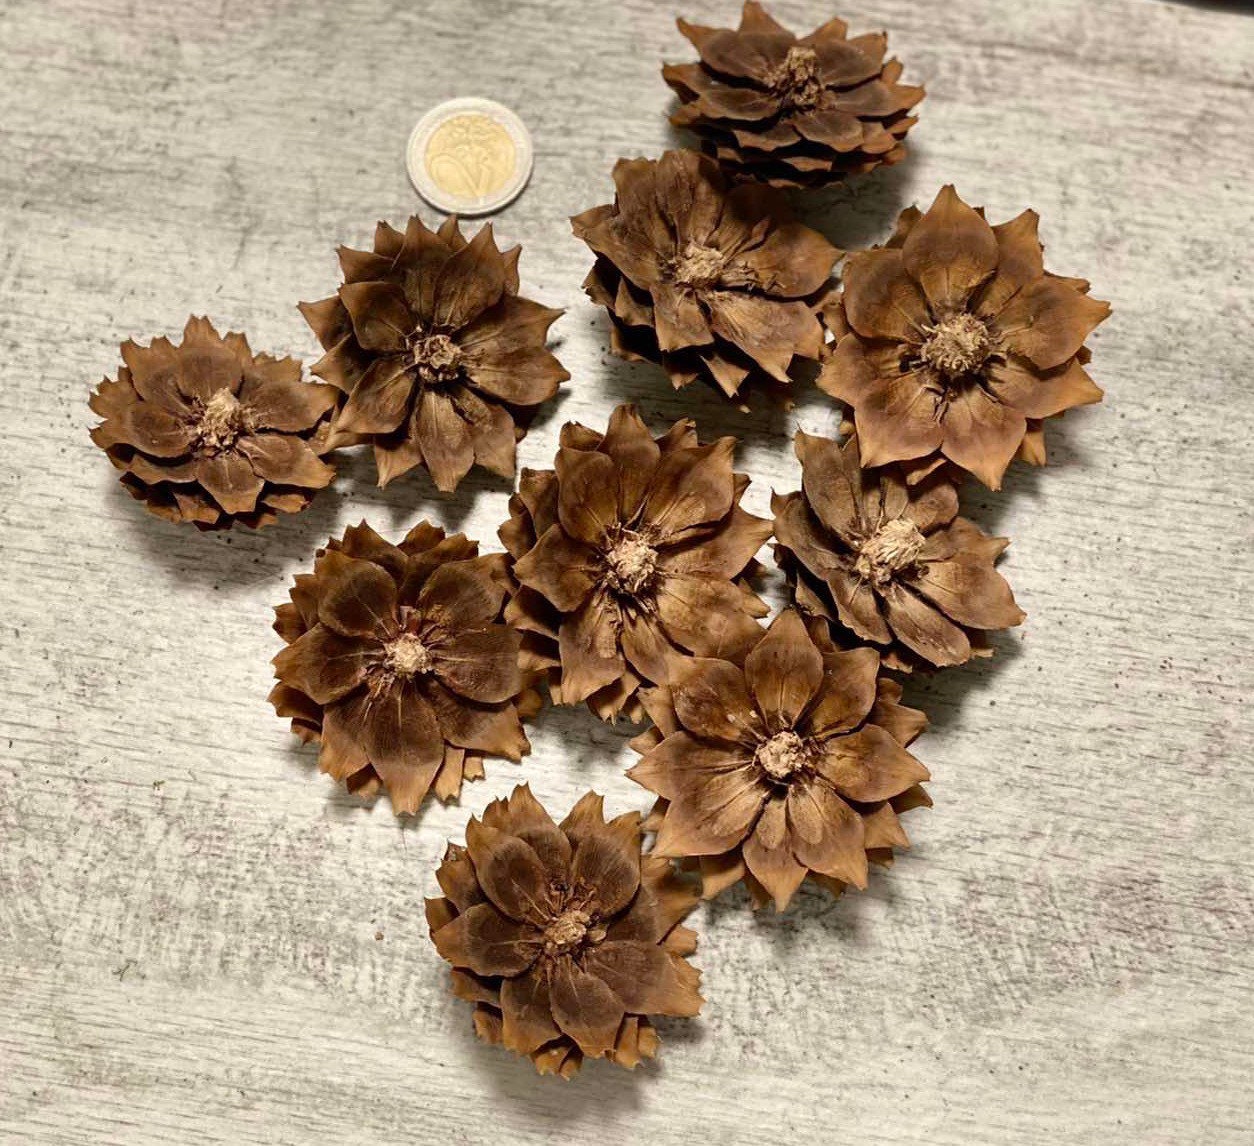 Flores secas con cono de pino de algodón para decoración interior